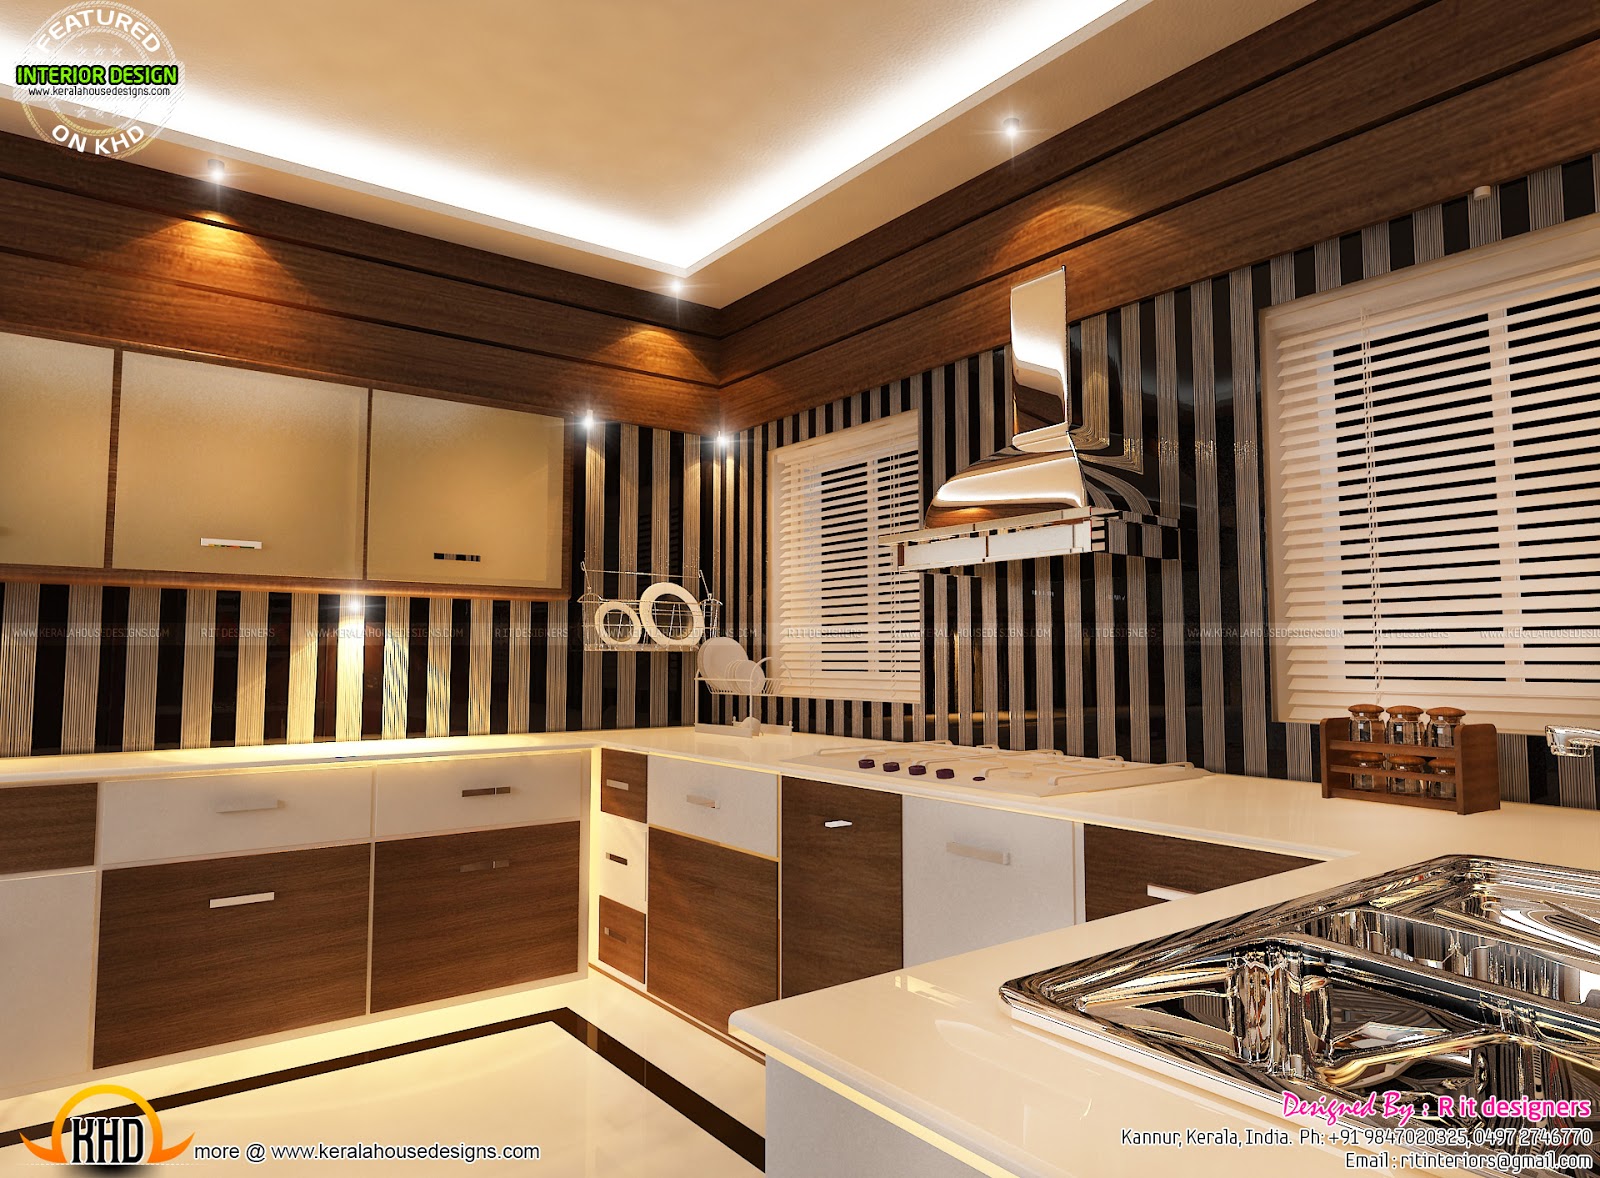 modular kitchen, bedroom and staircase interior - kerala